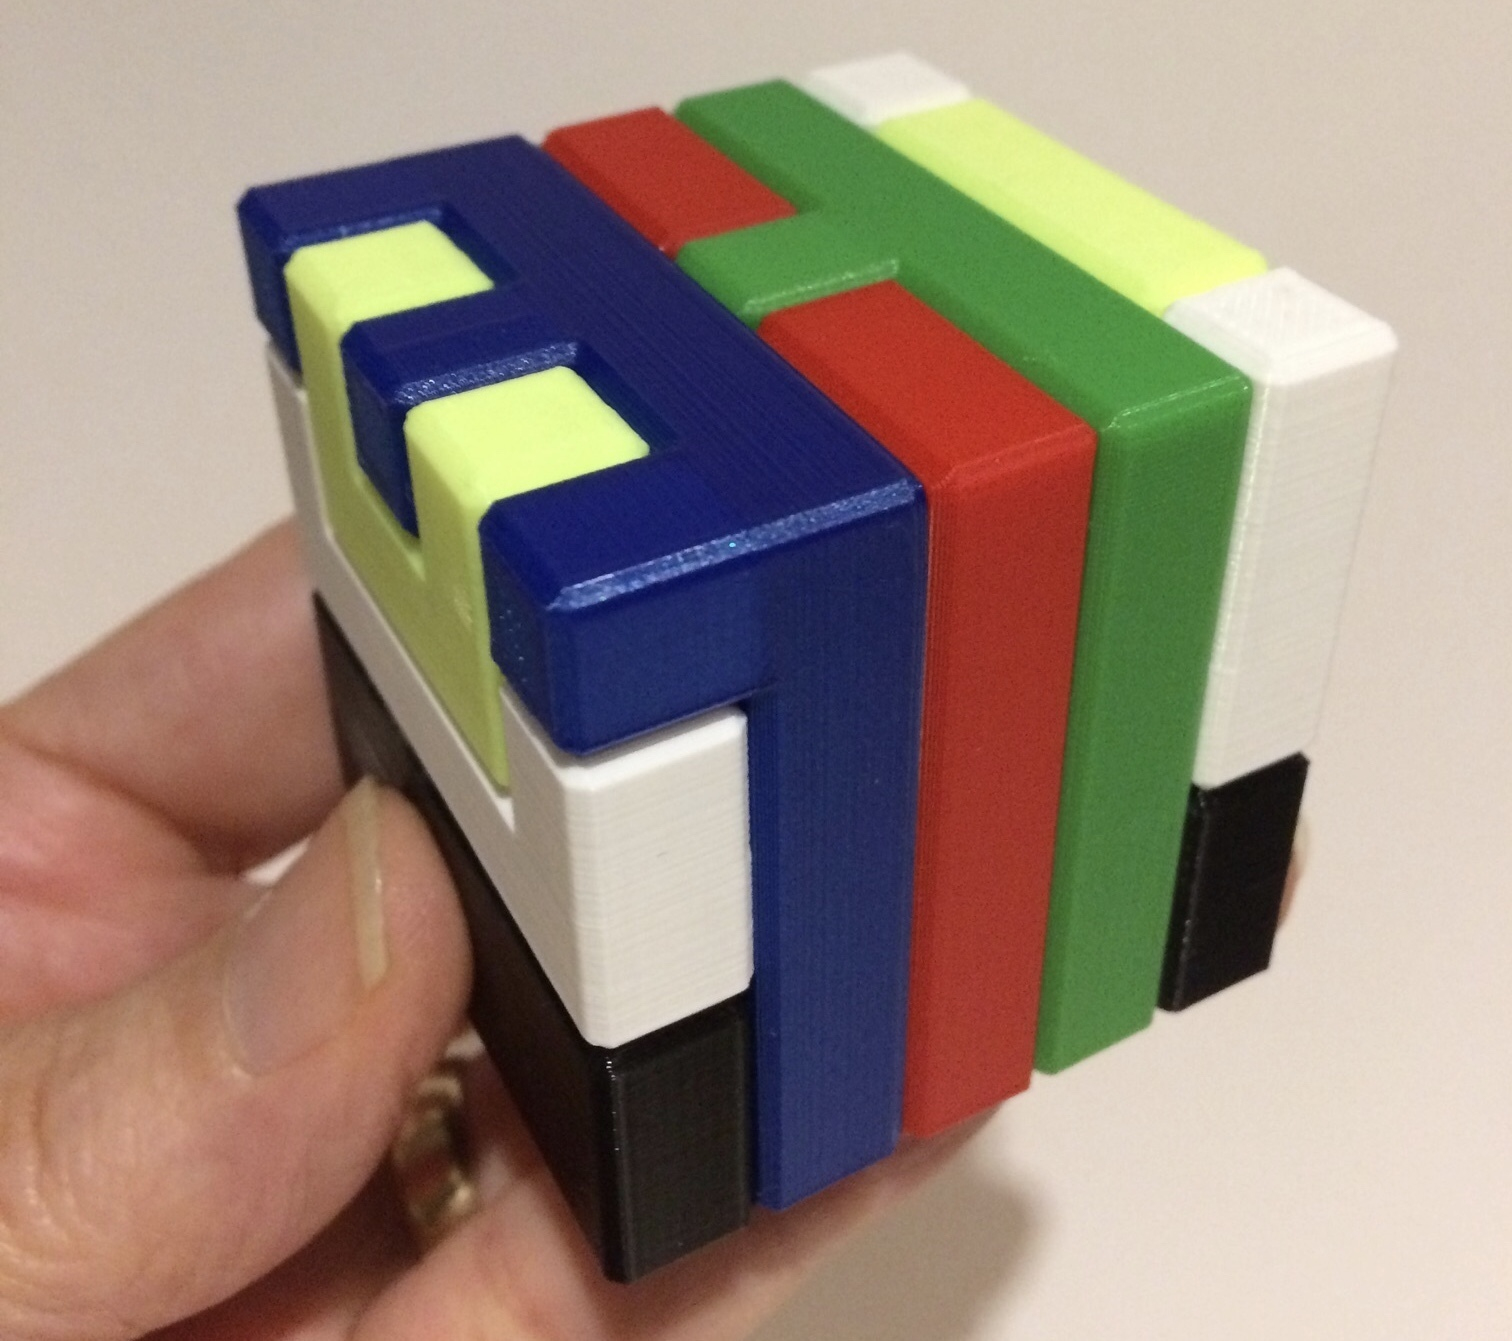 3D Printed Printable Interlocking Puzzle #4 - Level 11Richgain - Printable 3D Puzzle